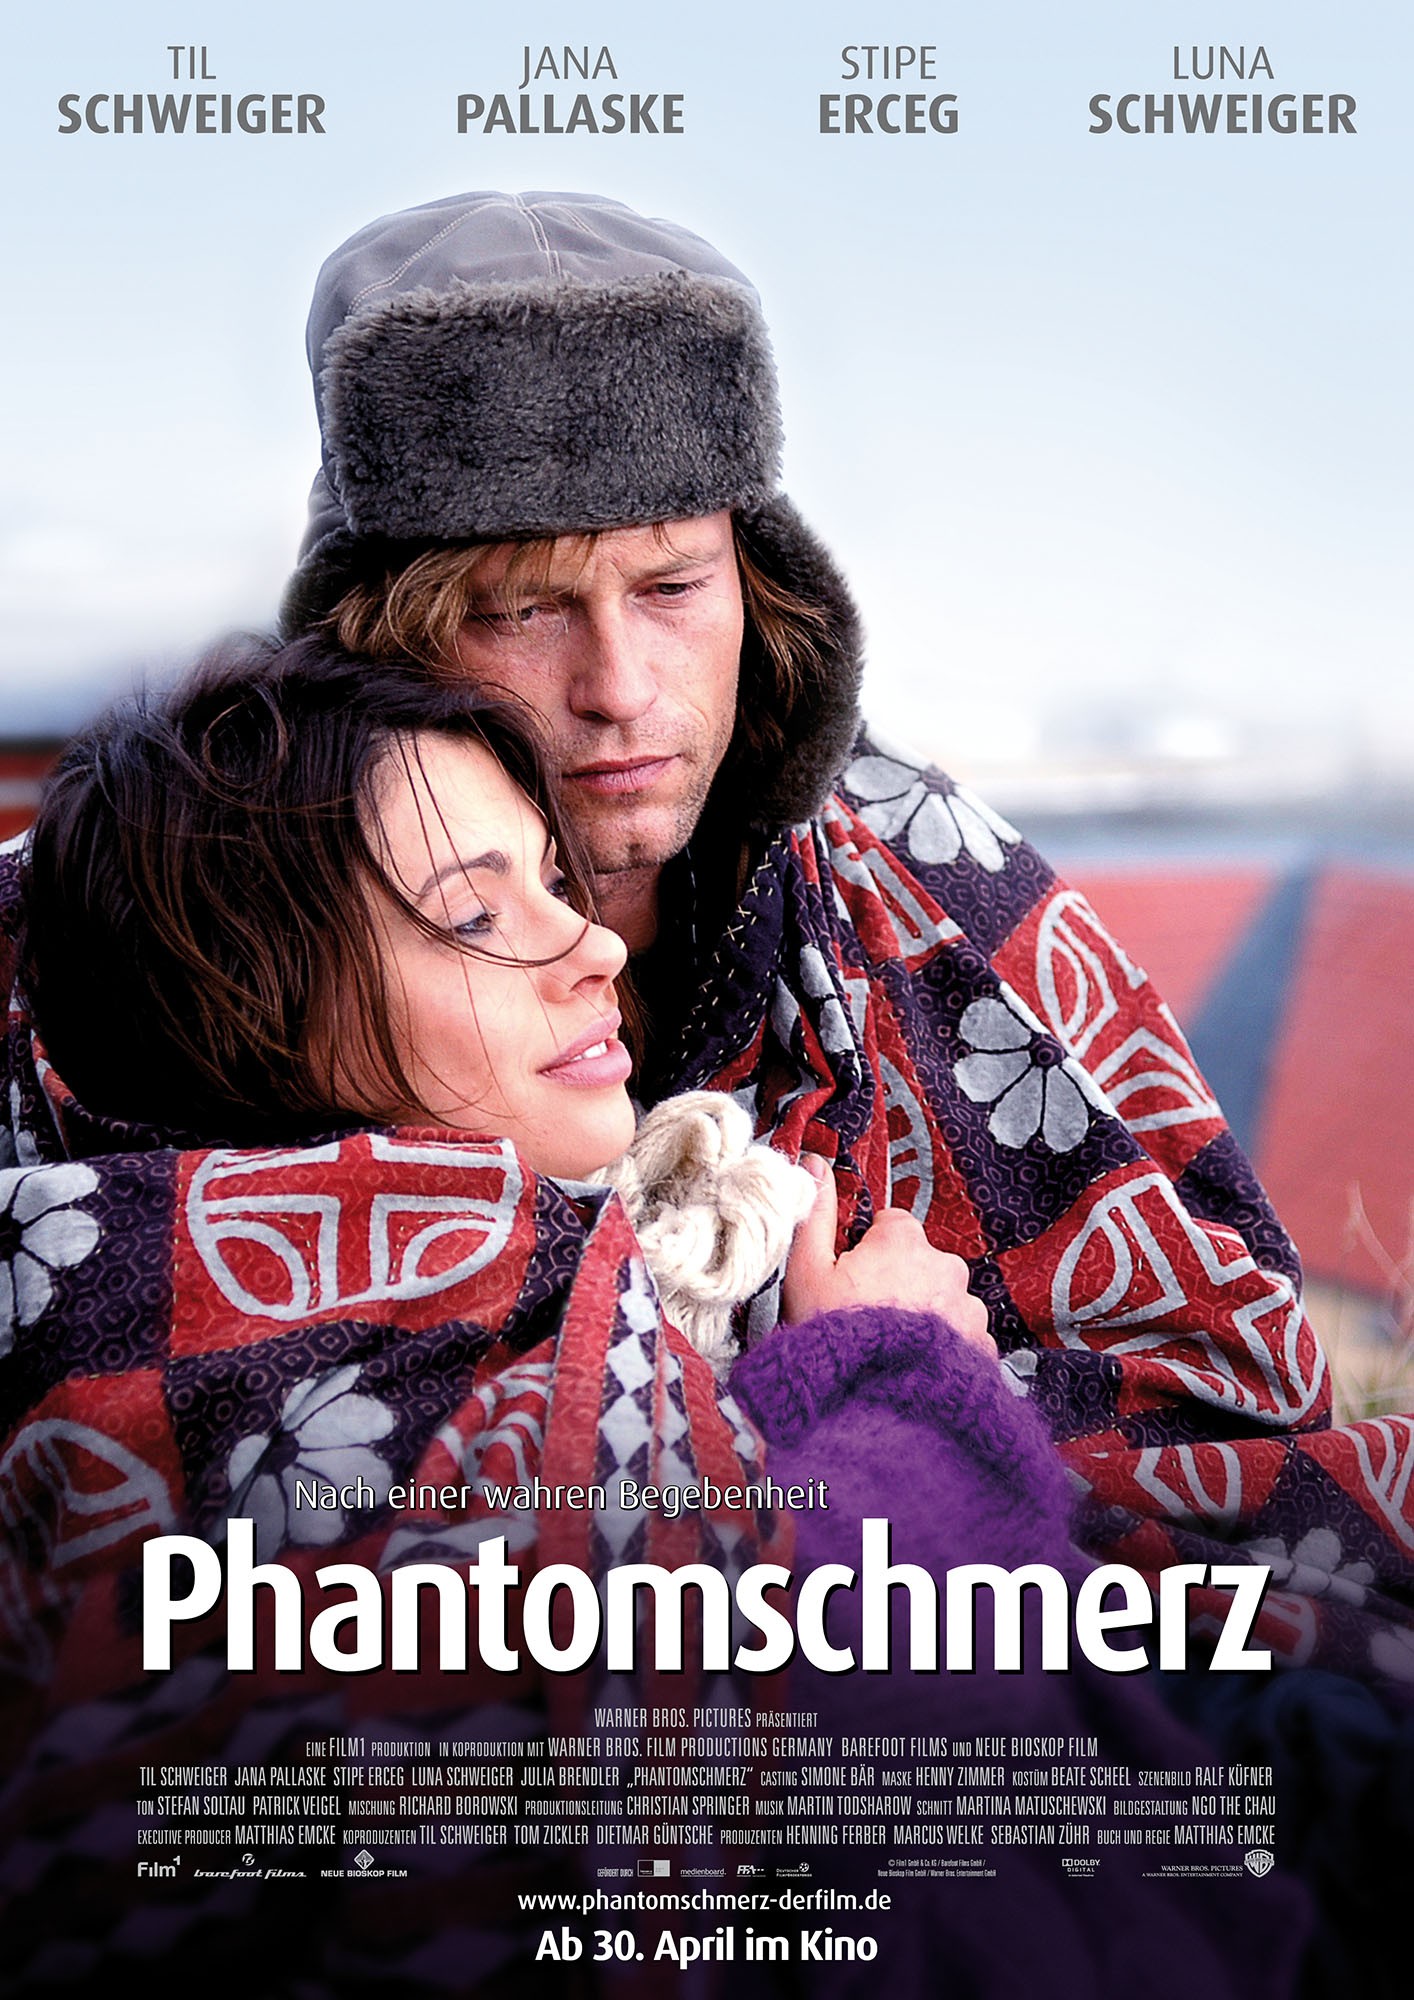 Mega Sized Movie Poster Image for Phantomschmerz 